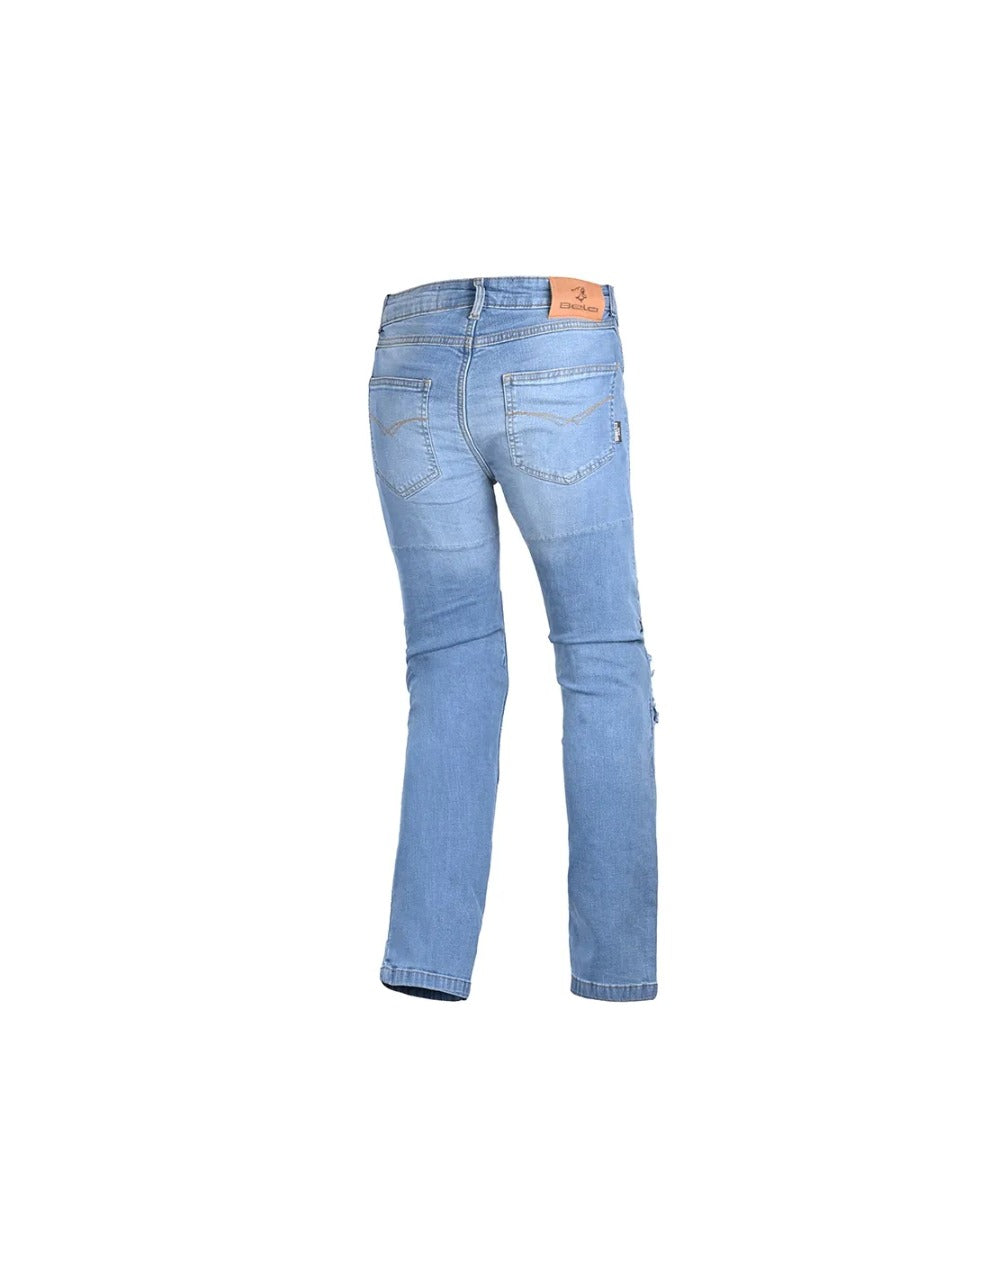 BELA Stone -  Denim Jeans - BLUE MaximomotoUK